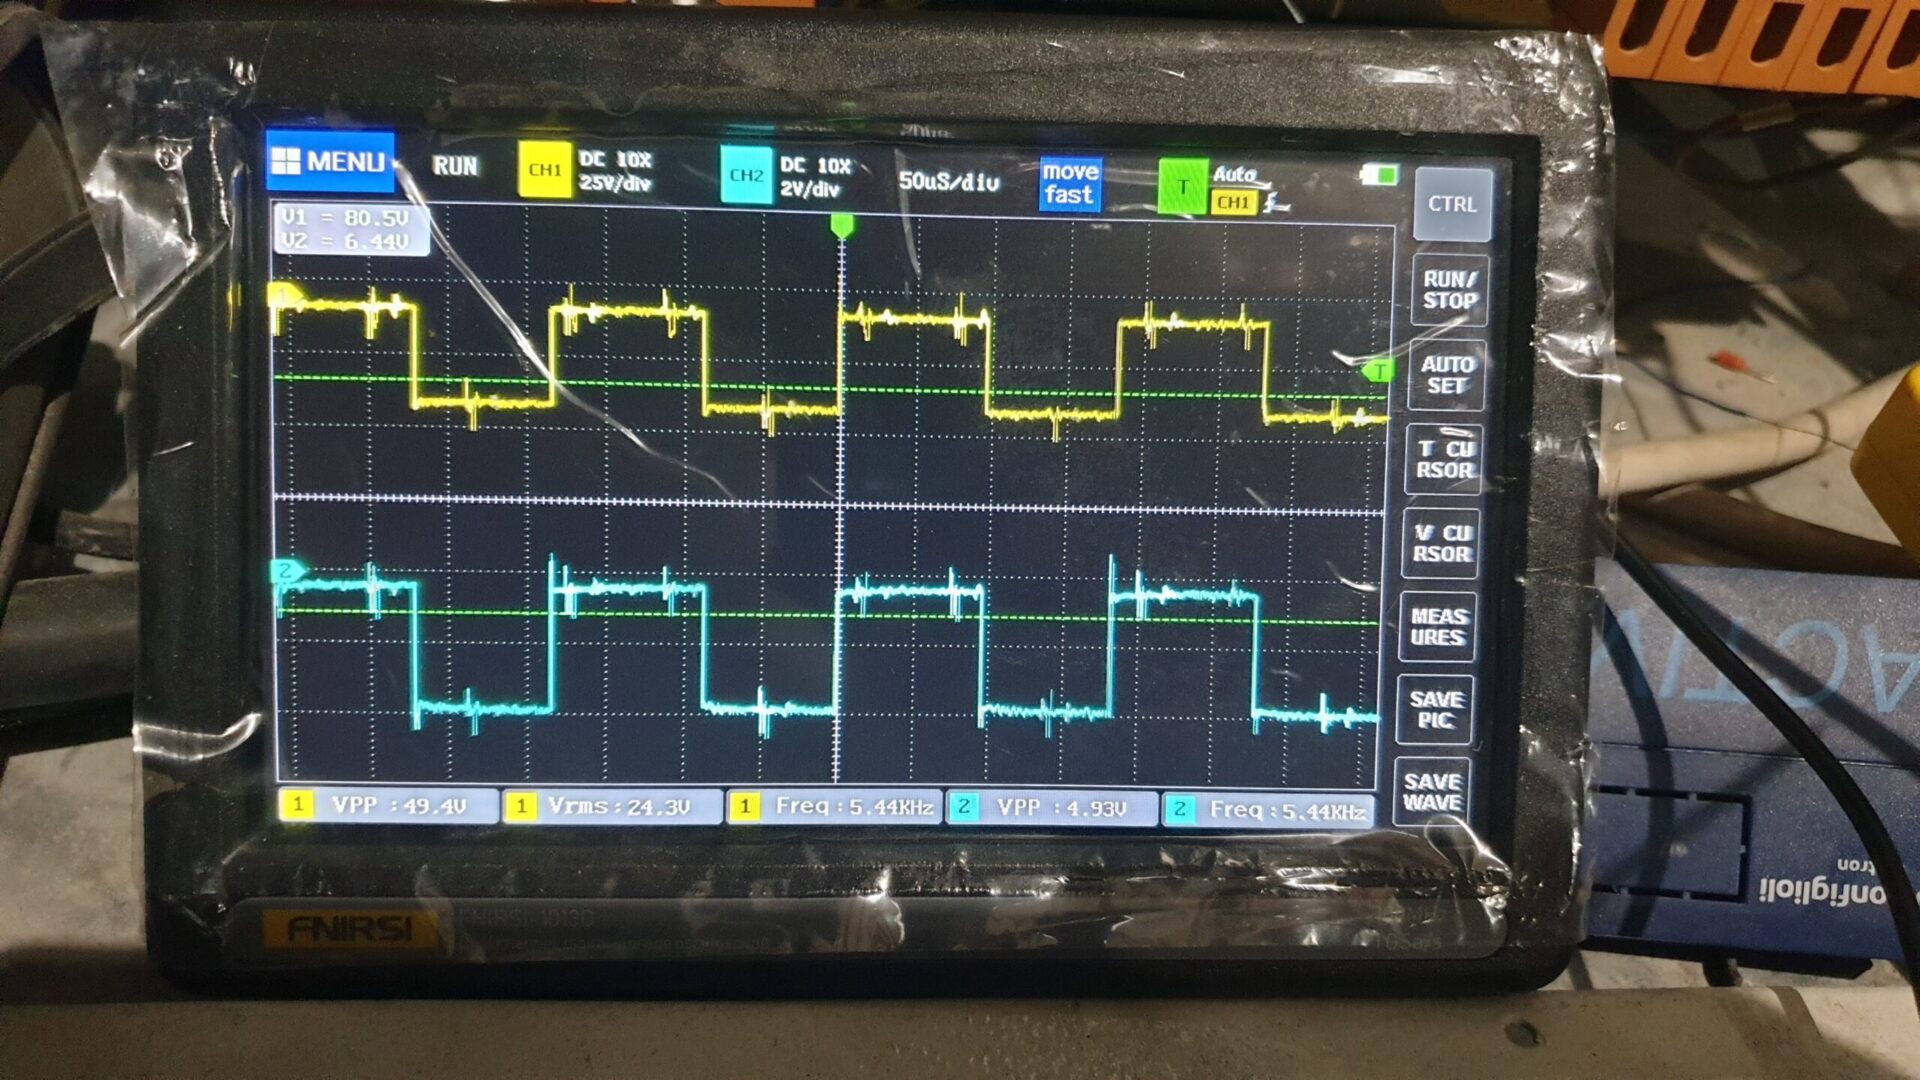 Oscilloscope in 500 RPM shows 5.44 KHz